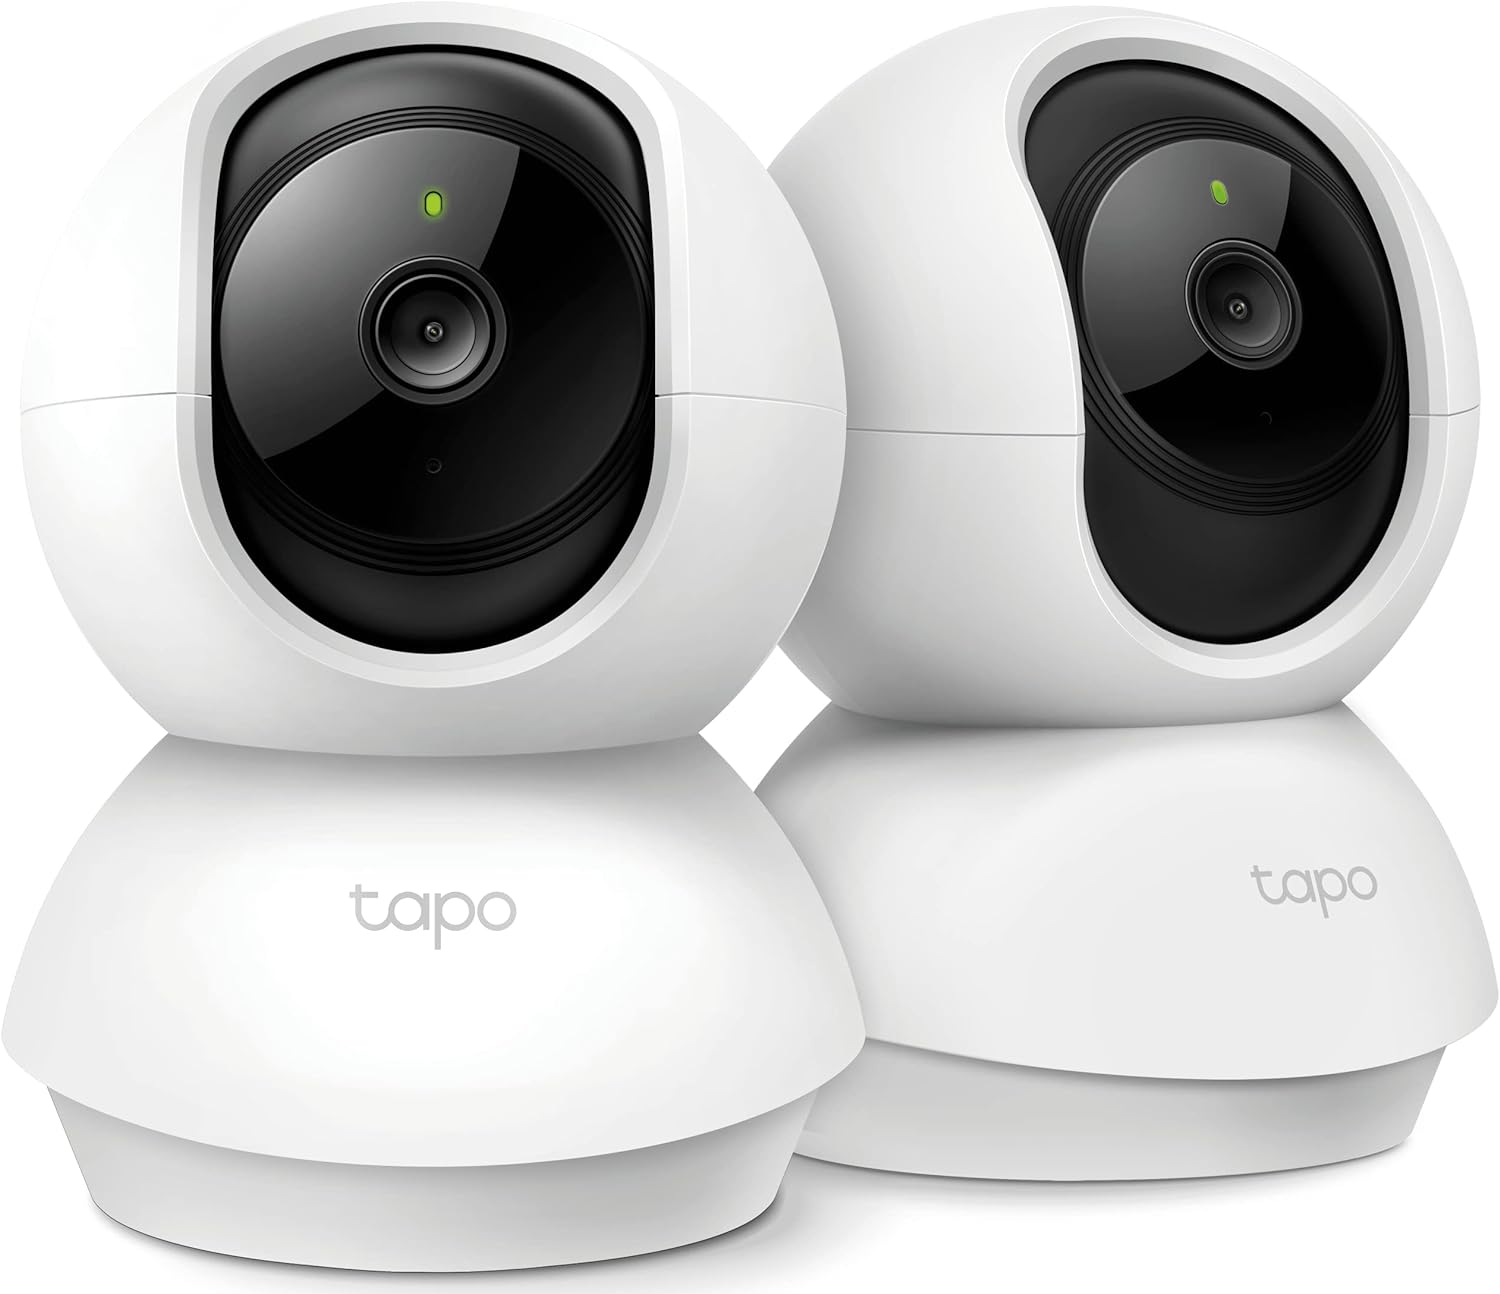 Tapo C210P2 Pan/Tilt Smart Security Camera 360°, 2K 3MP High Definition